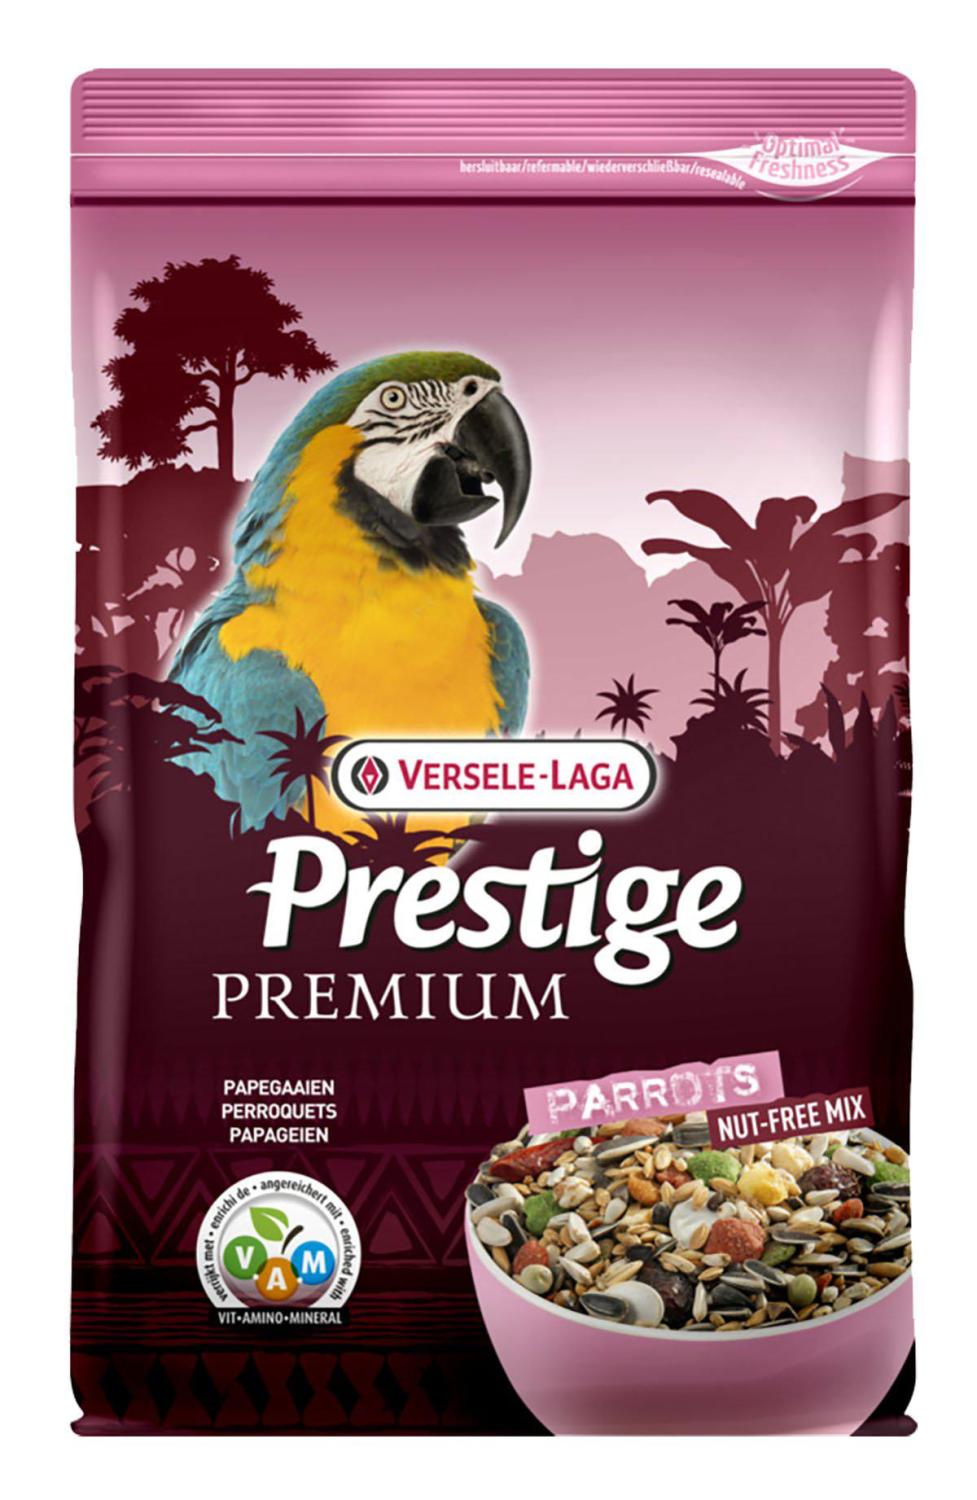 New VL Prestige Papegojbl. Premium 2 kg